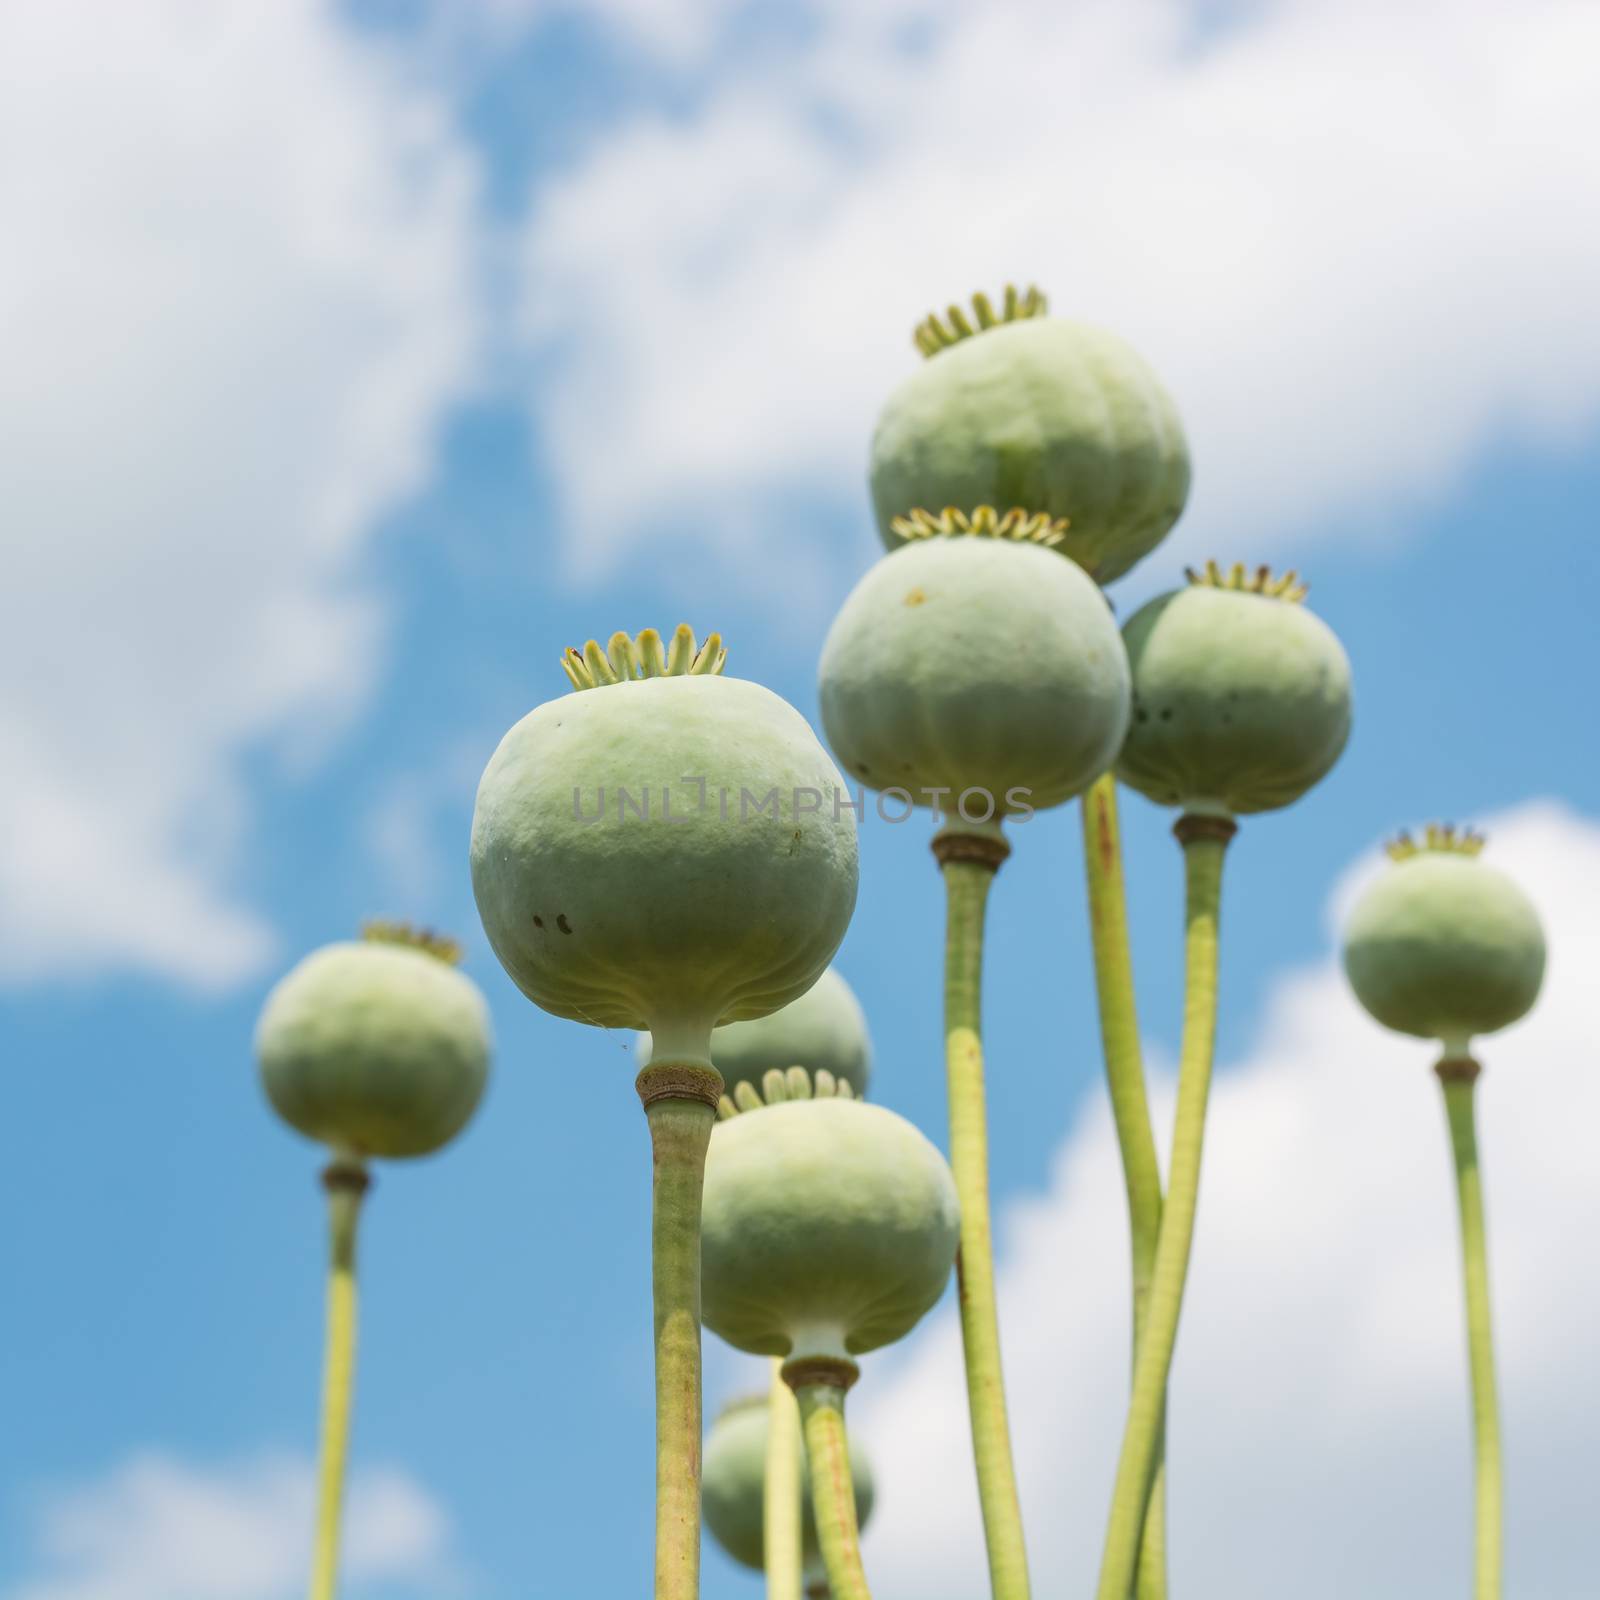 Opium Poppy Capsules by milinz